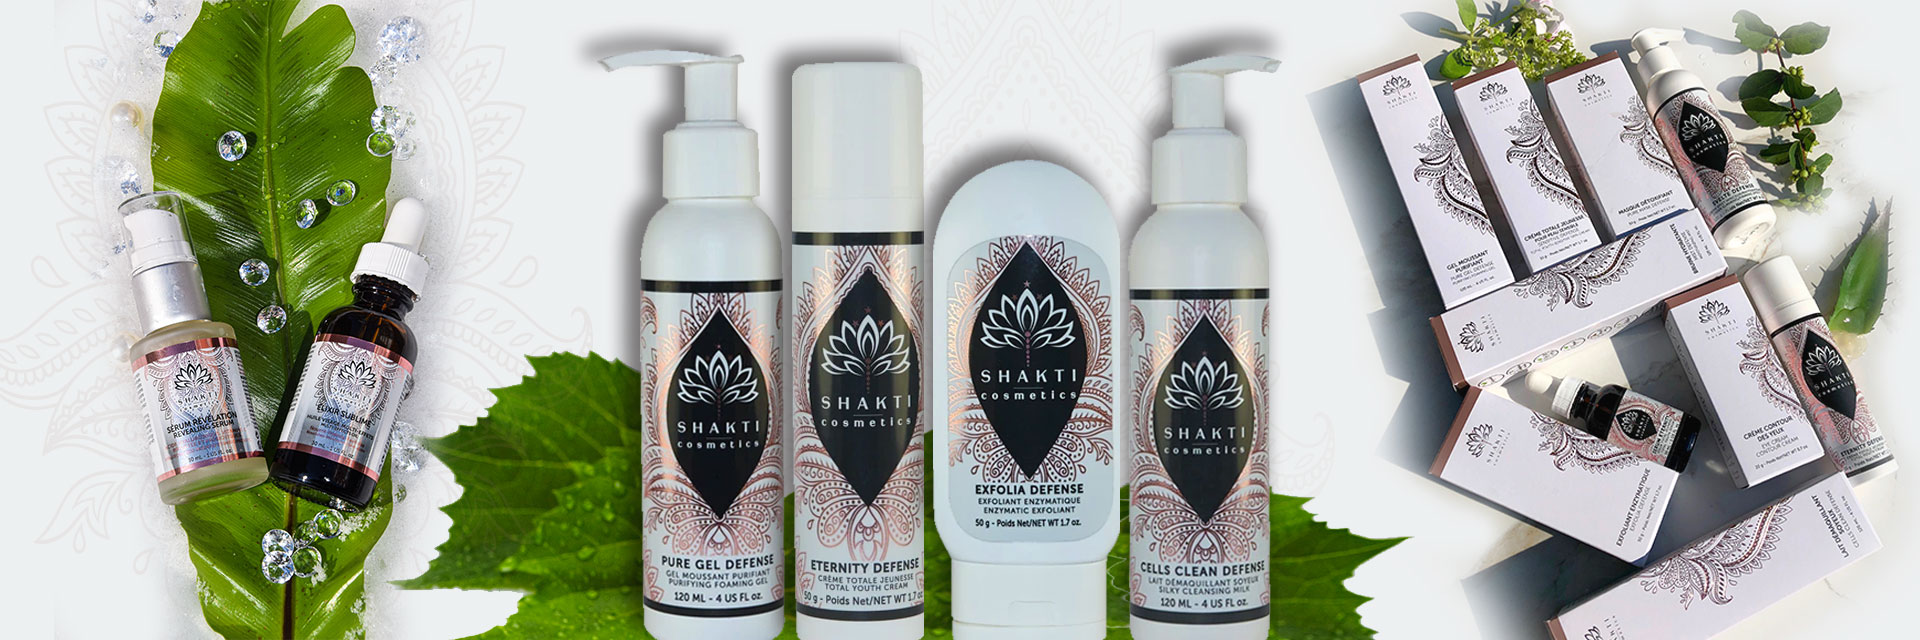 Produits Shakti Cosmetics